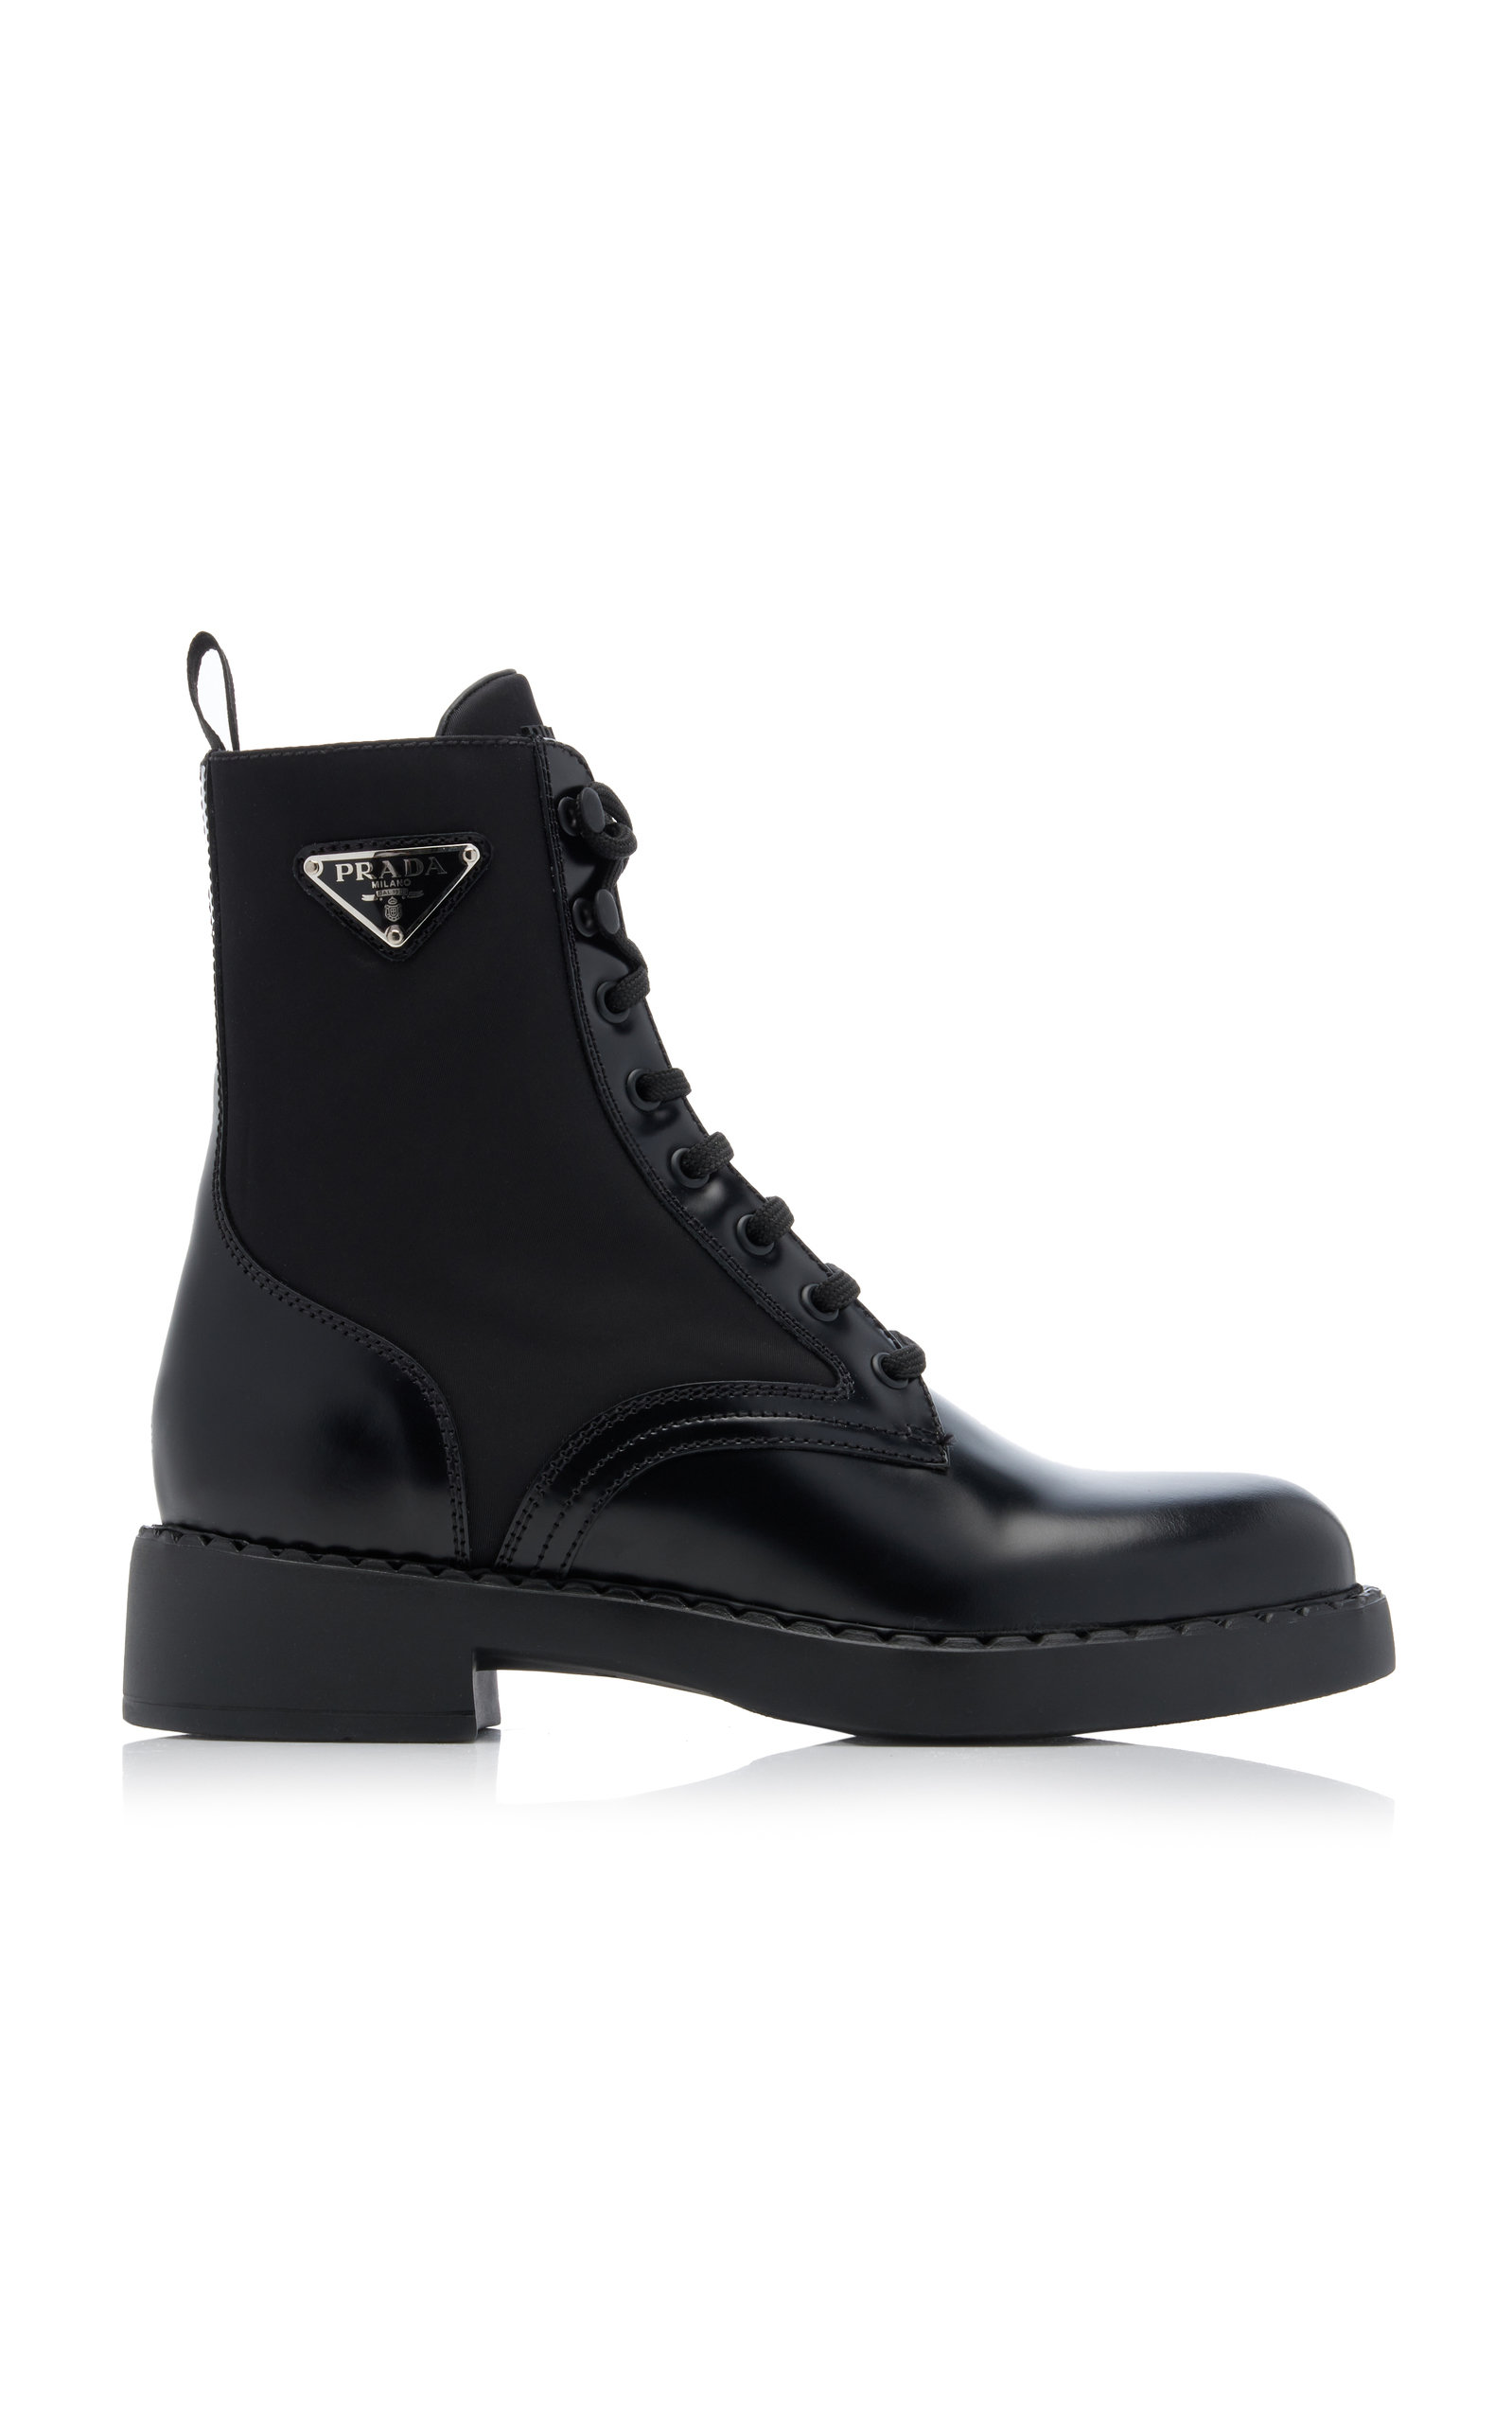 Prada - Women's Re-Nylon and Leather Combat Boots - Black - IT 35 - Moda Operandi